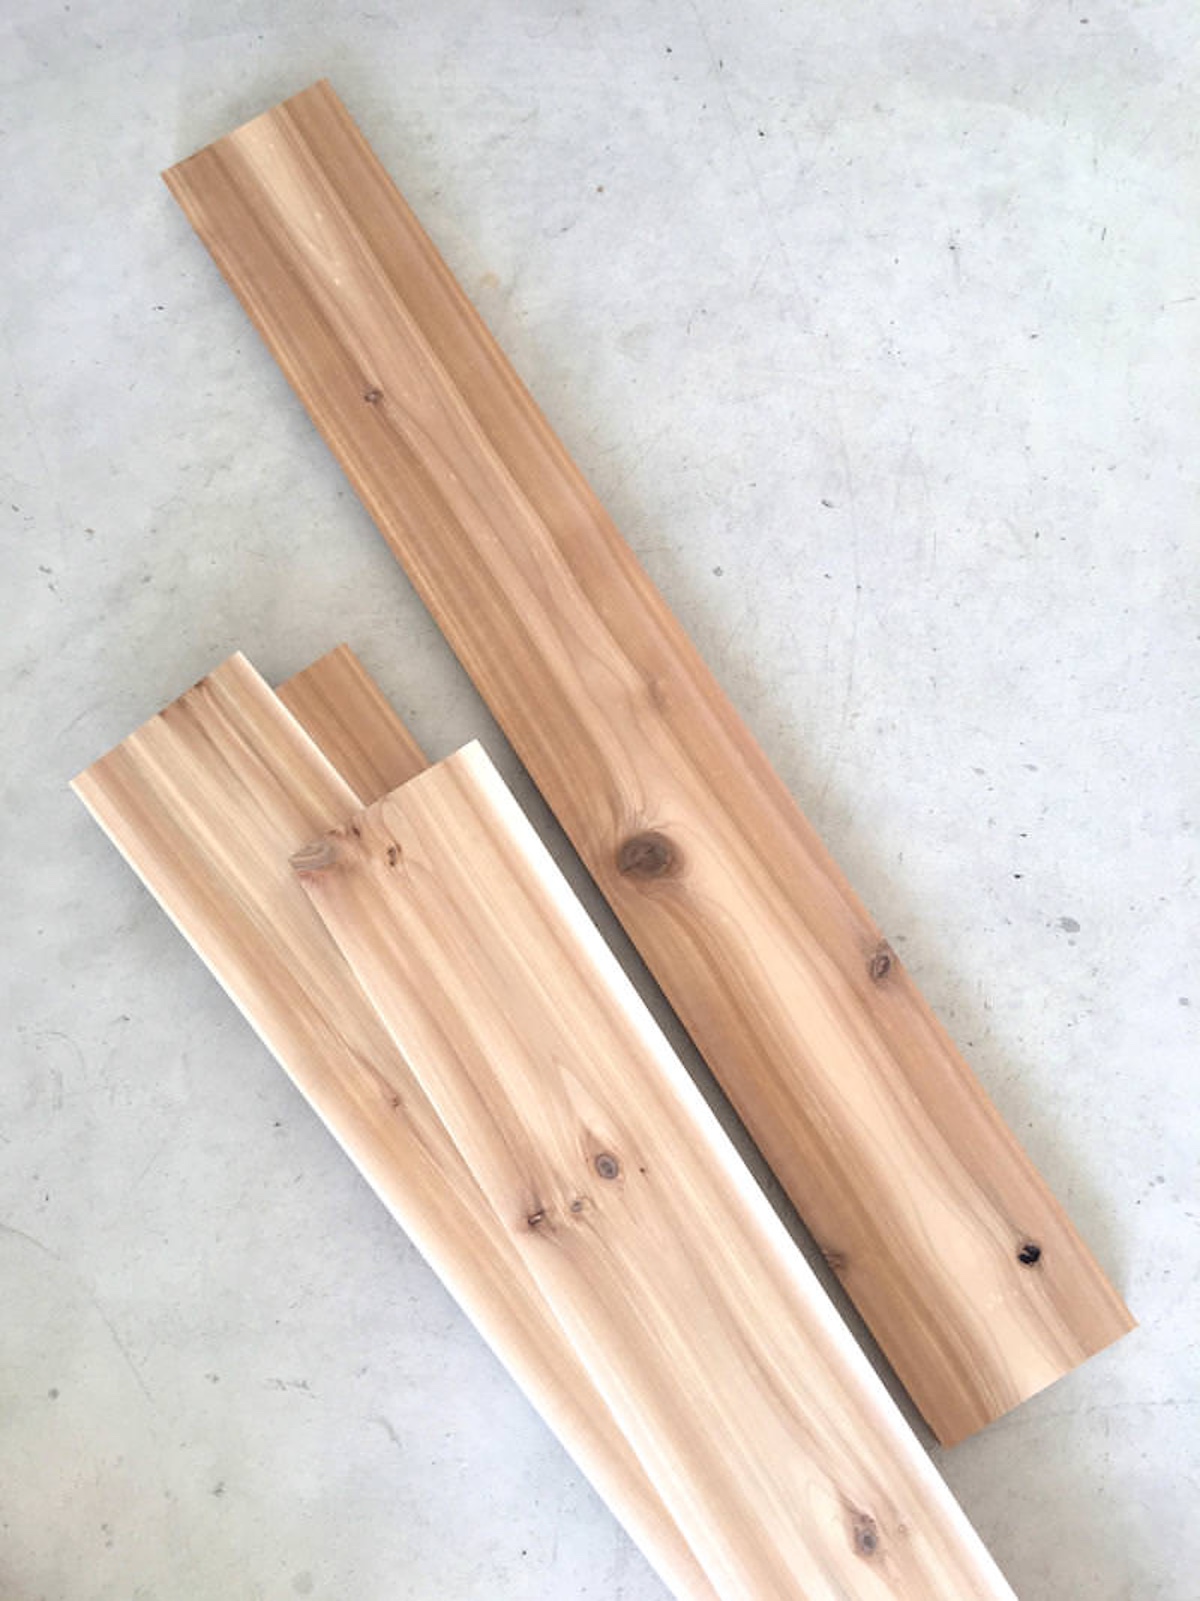 Cedar decking planks after being cut